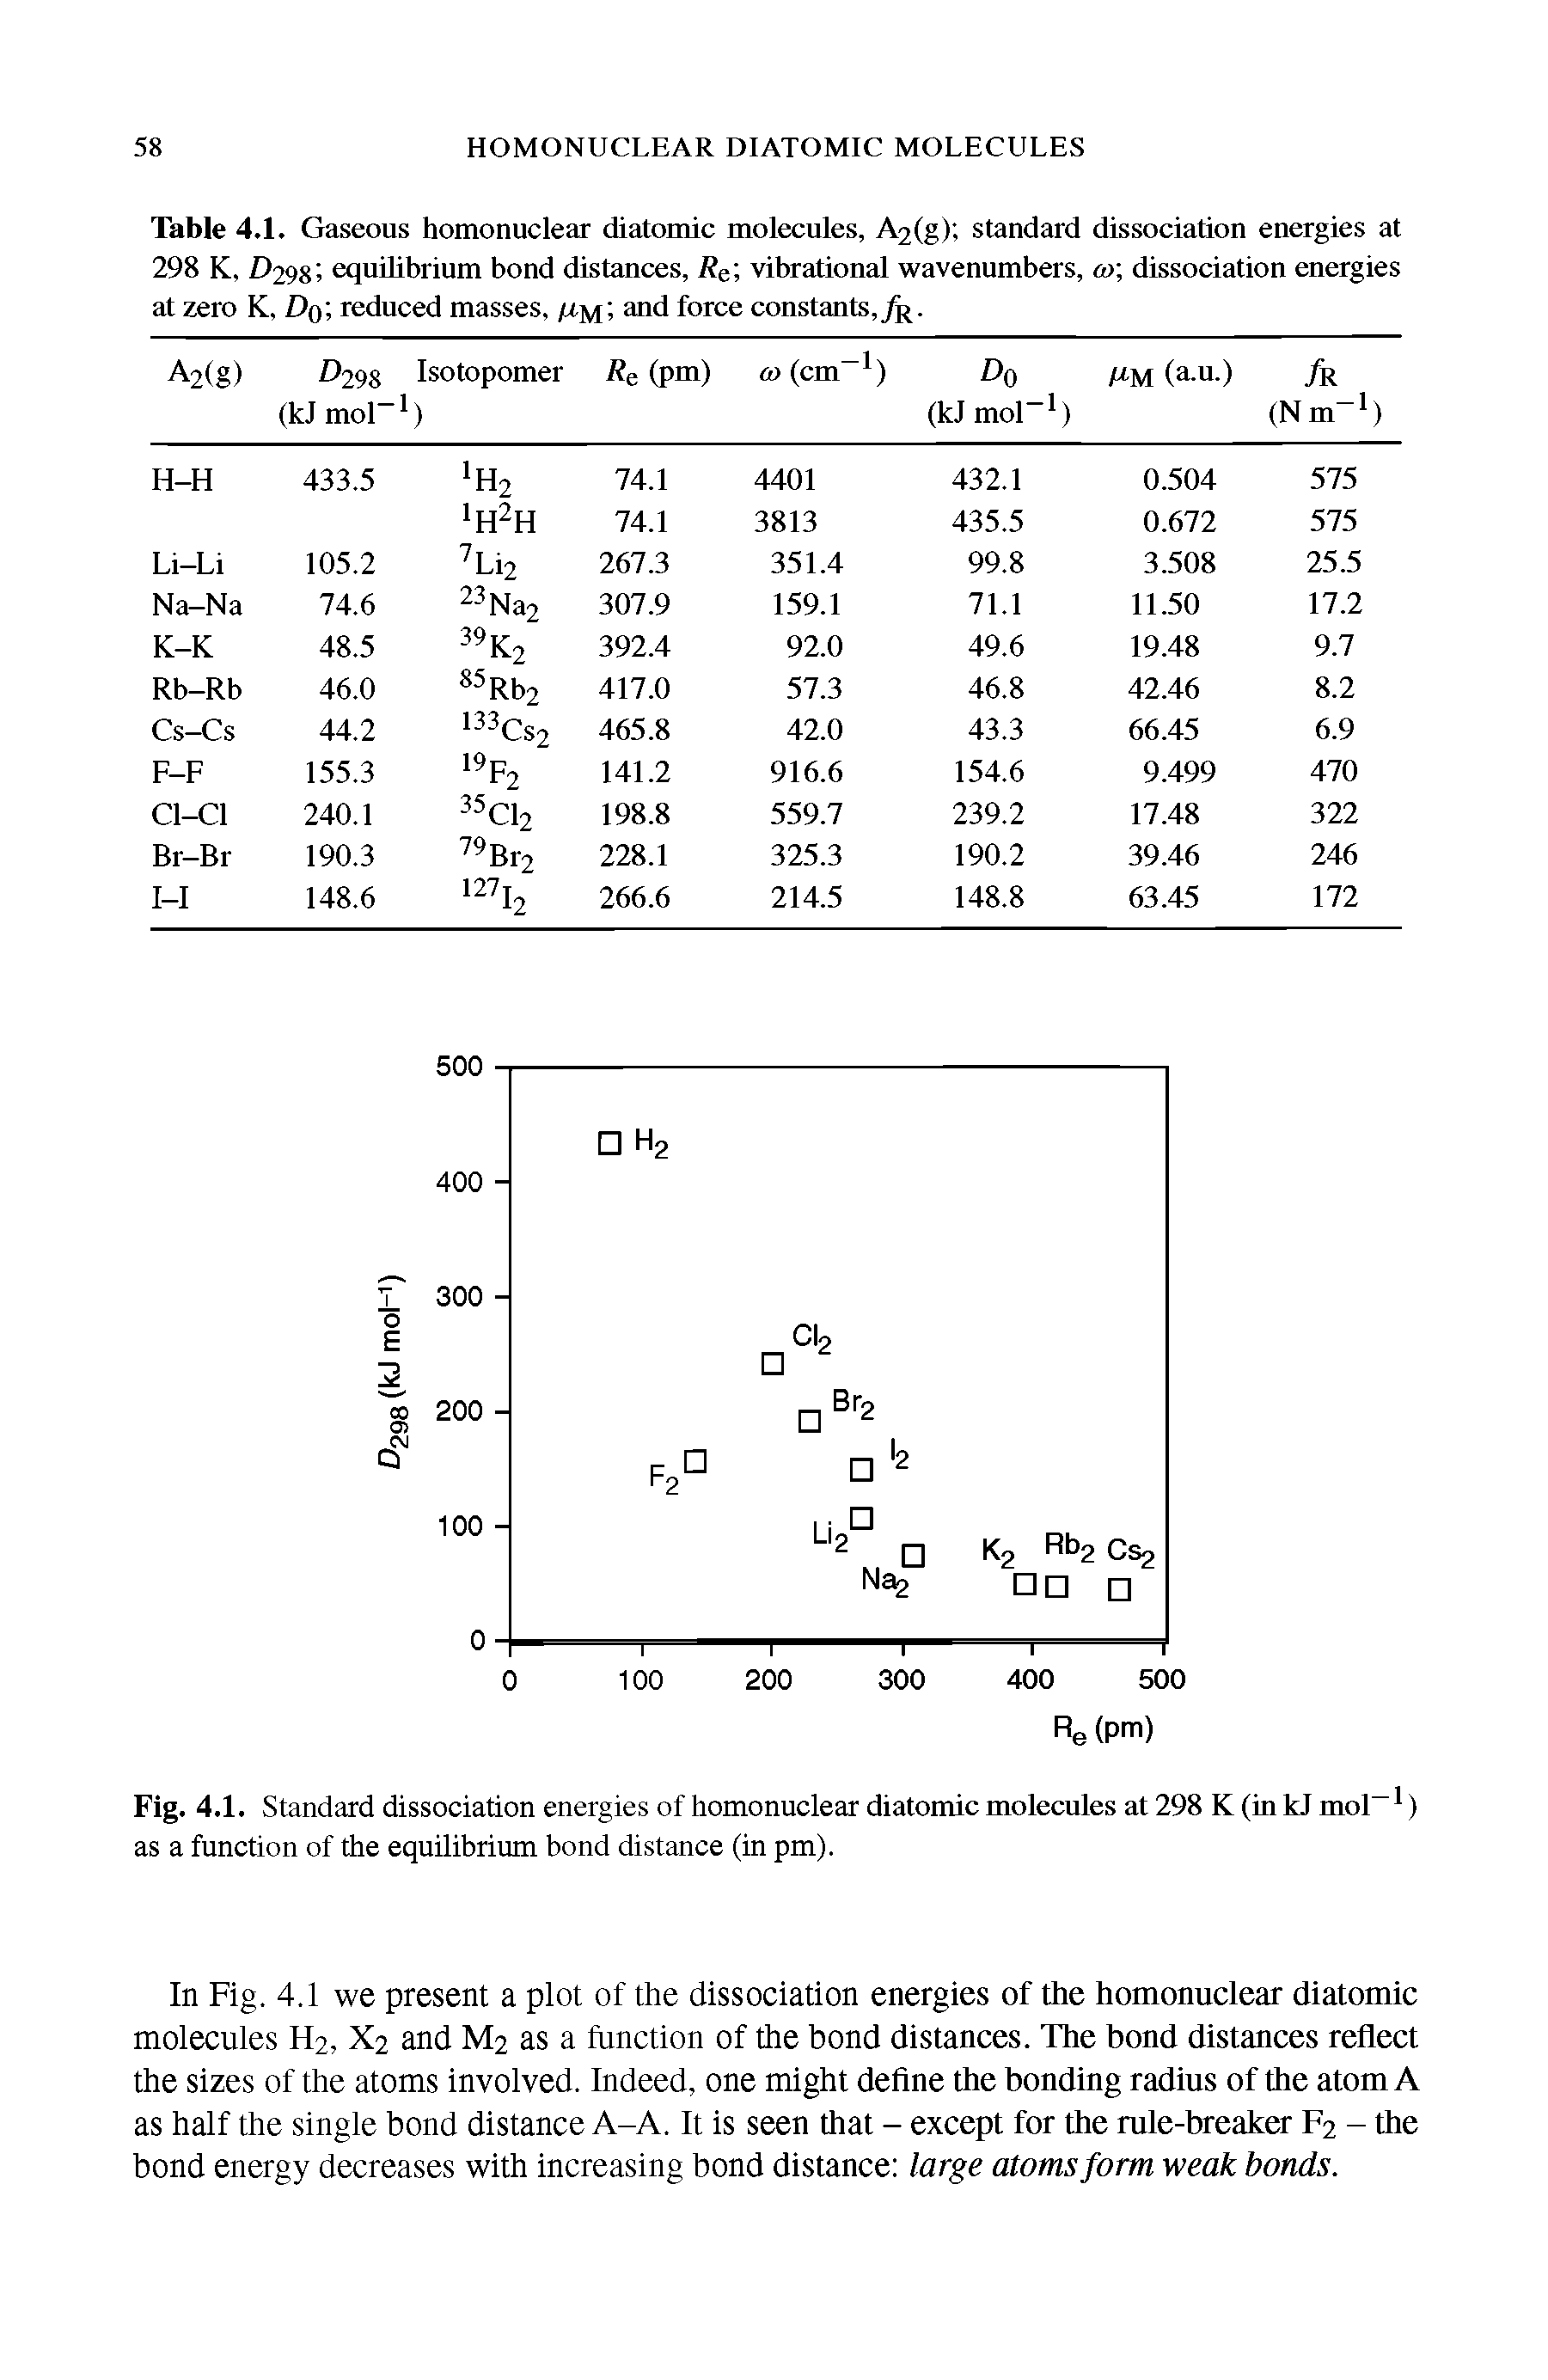 Table 4.1. Gaseous homonuclear diatomic molecules, A2(g) standard dissociation energies at 298 K, D298 equilibrium bond distances, R vibrational wavenumbers, a> dissociation energies at zero K, Dq reduced masses, /u, and force constants,/r.